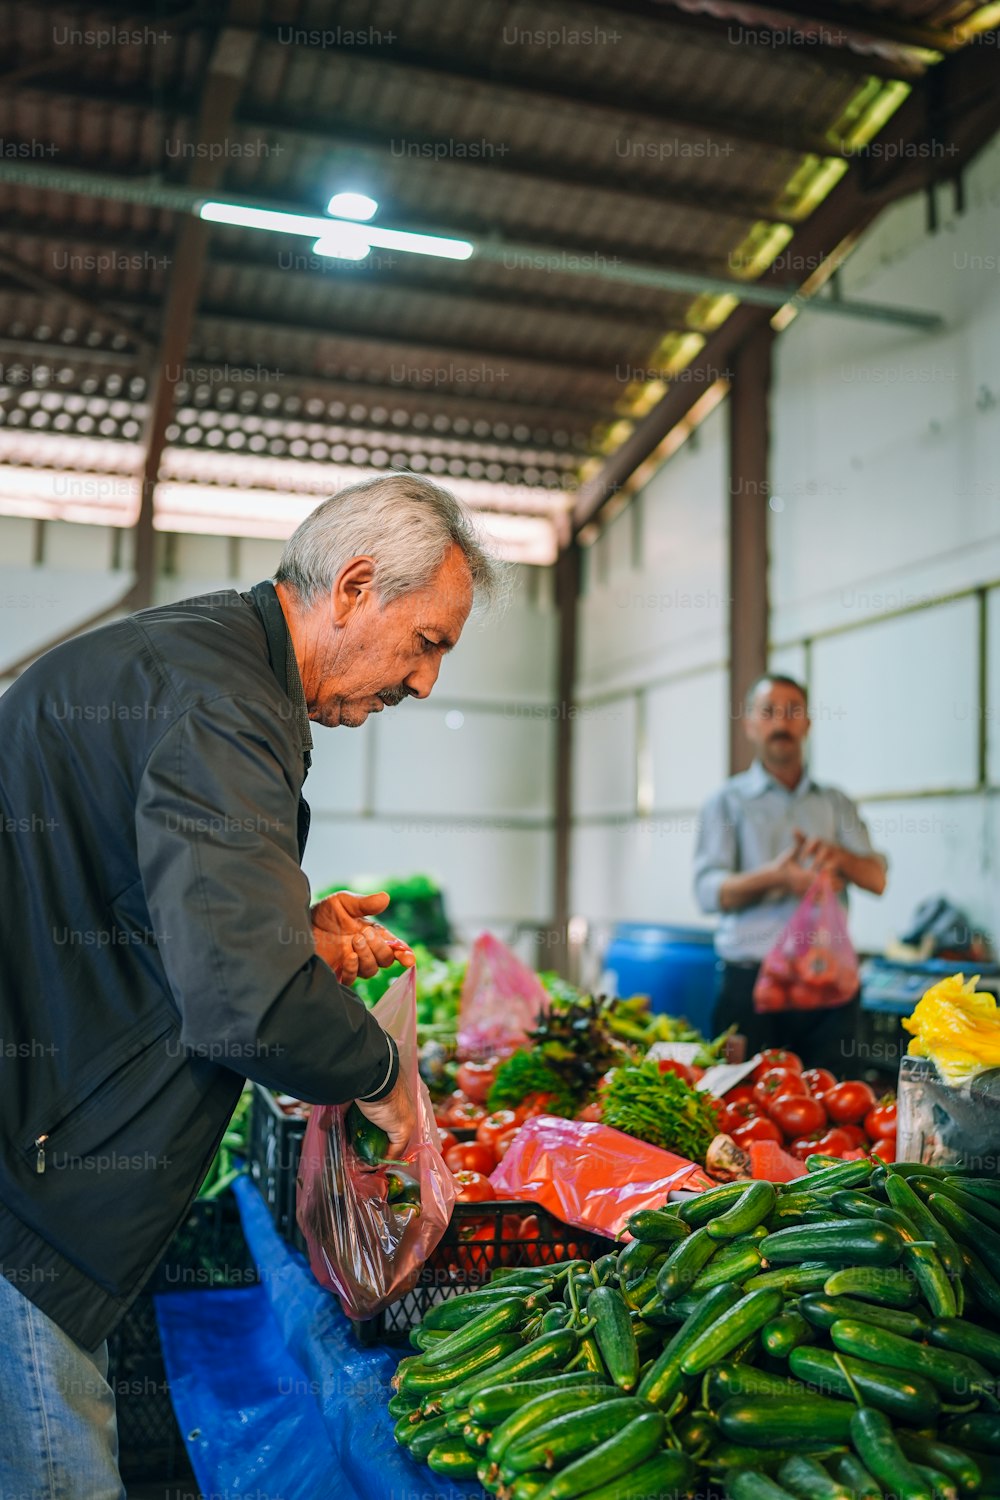 Un hombre parado frente a una pila de verduras